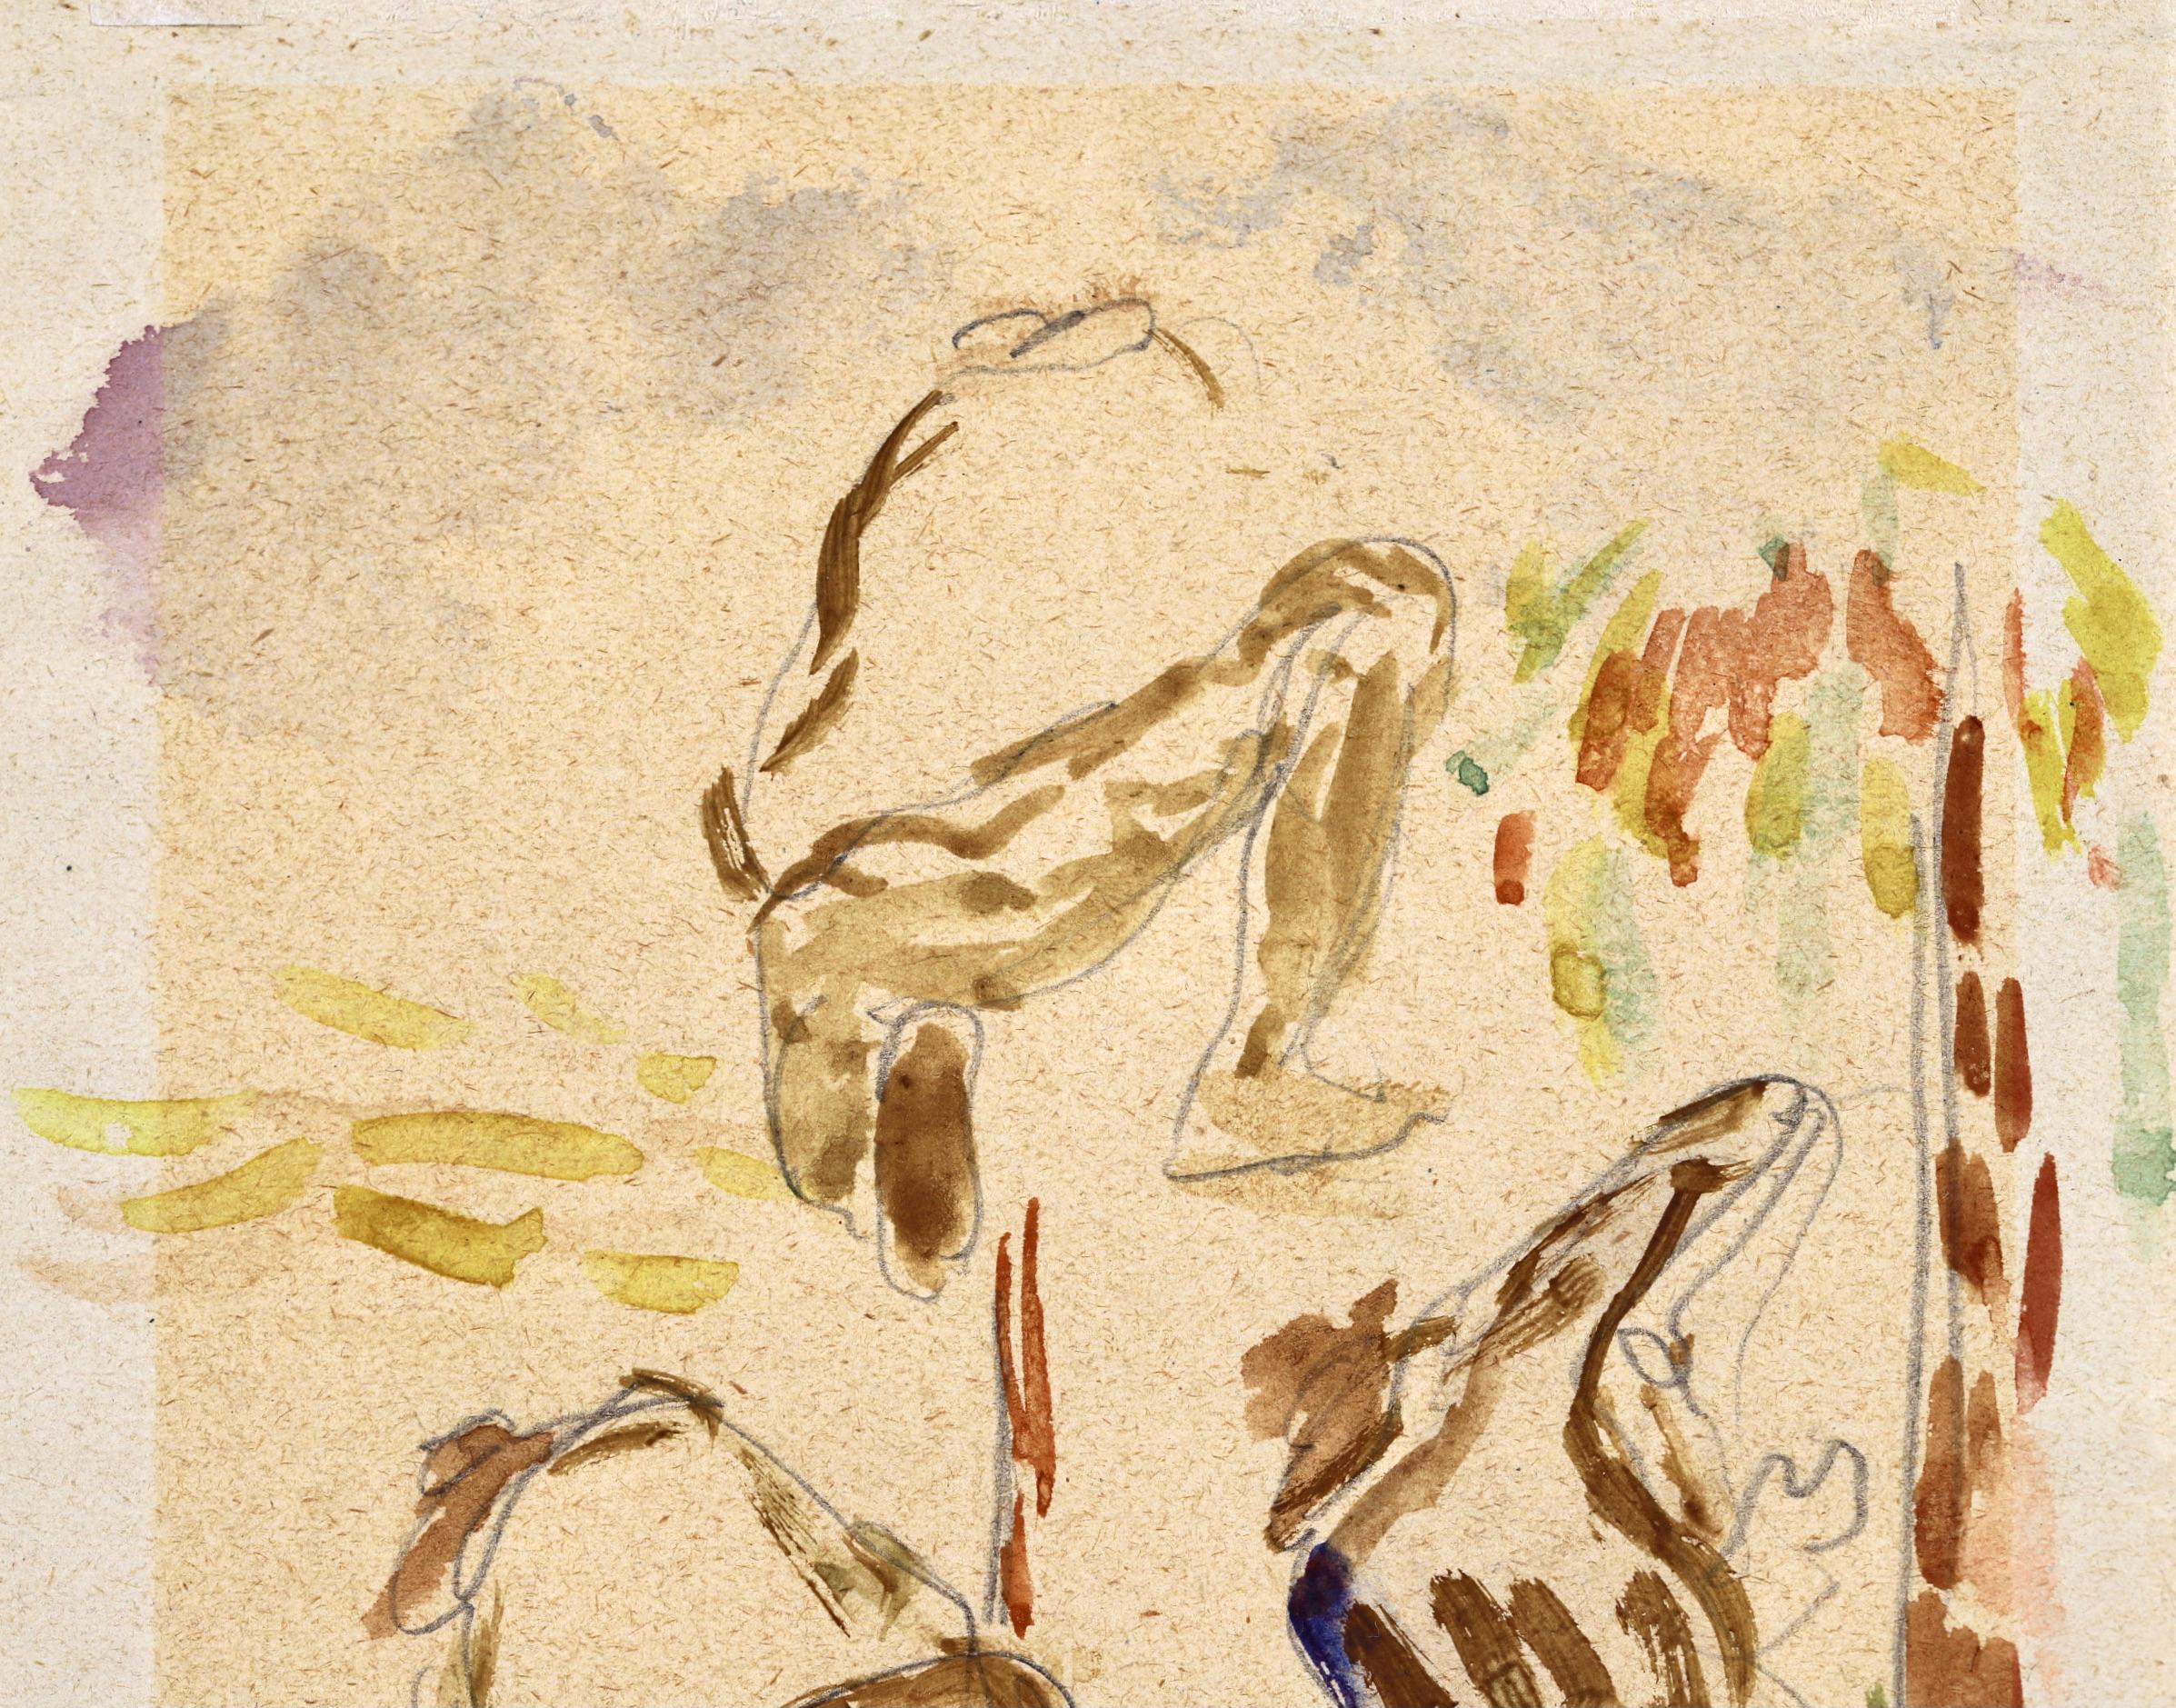 Etude de travailleurs – Impressionistisches figuratives Aquarell von Henri Cross (Impressionismus), Painting, von Henri Edmond Cross